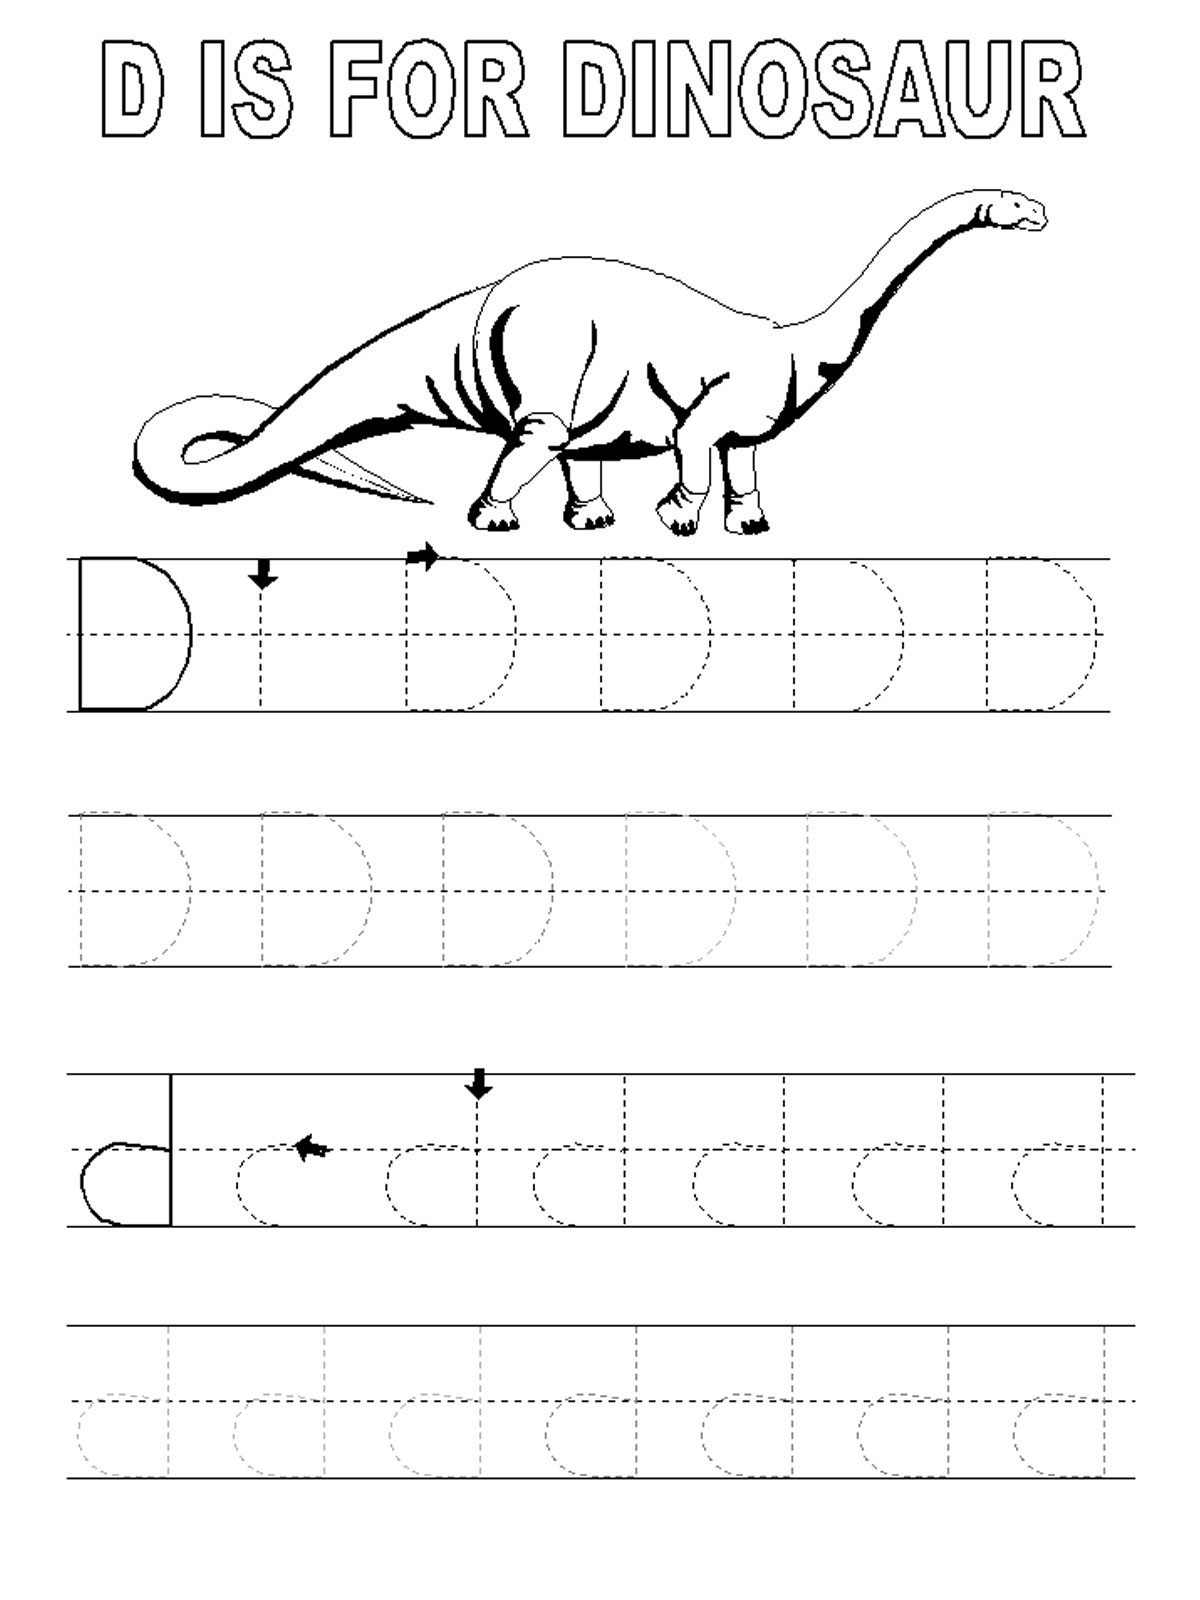 trace letter d worksheets preschool tracinglettersworksheetscom - trace ...